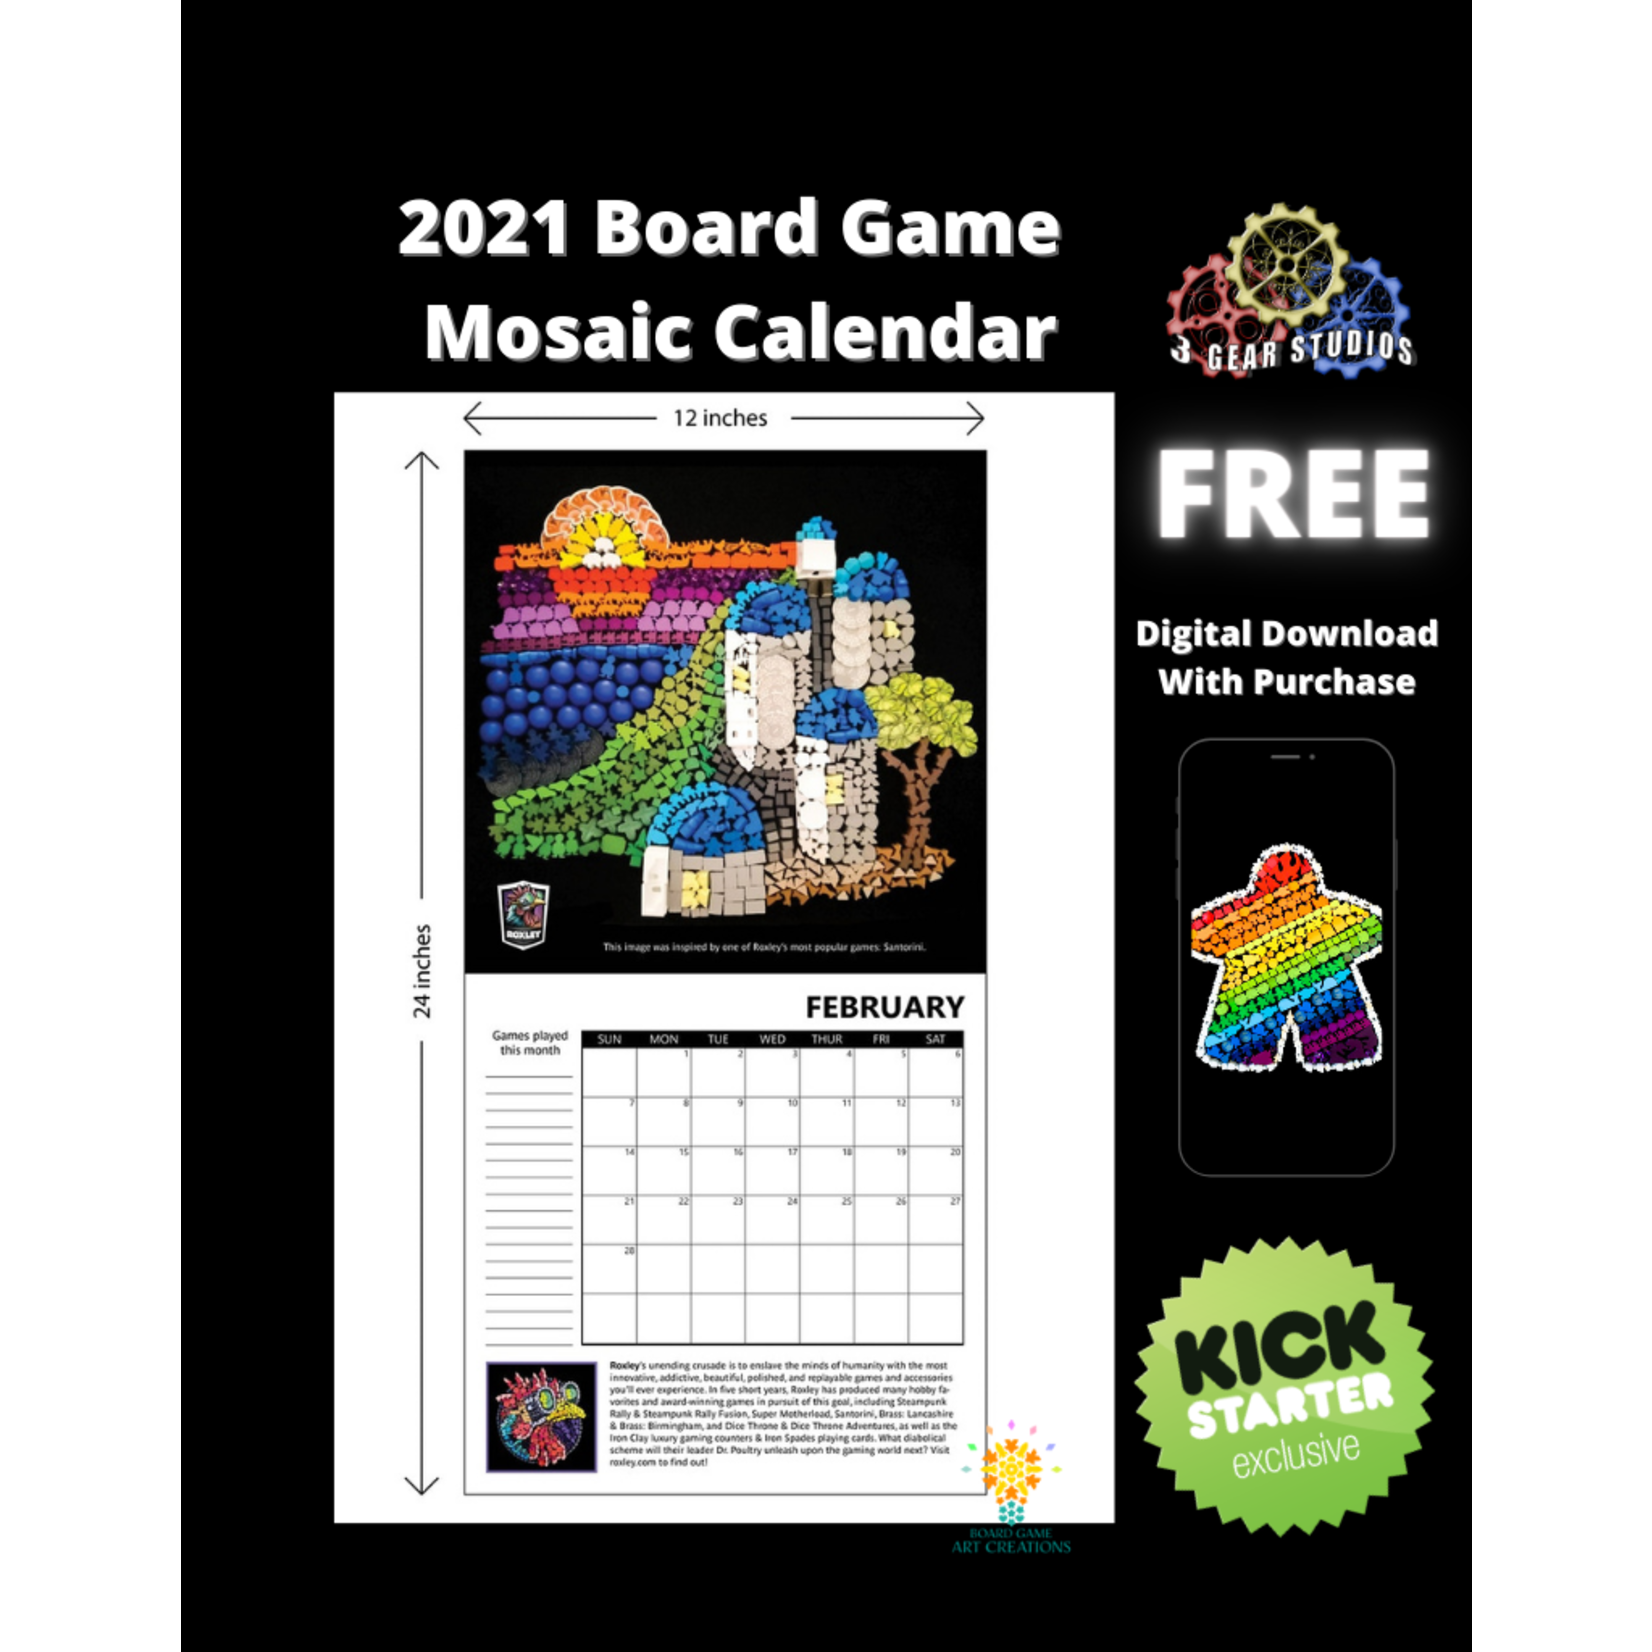 2021 Board Game Mosaic Calendar 3 Gear Studios